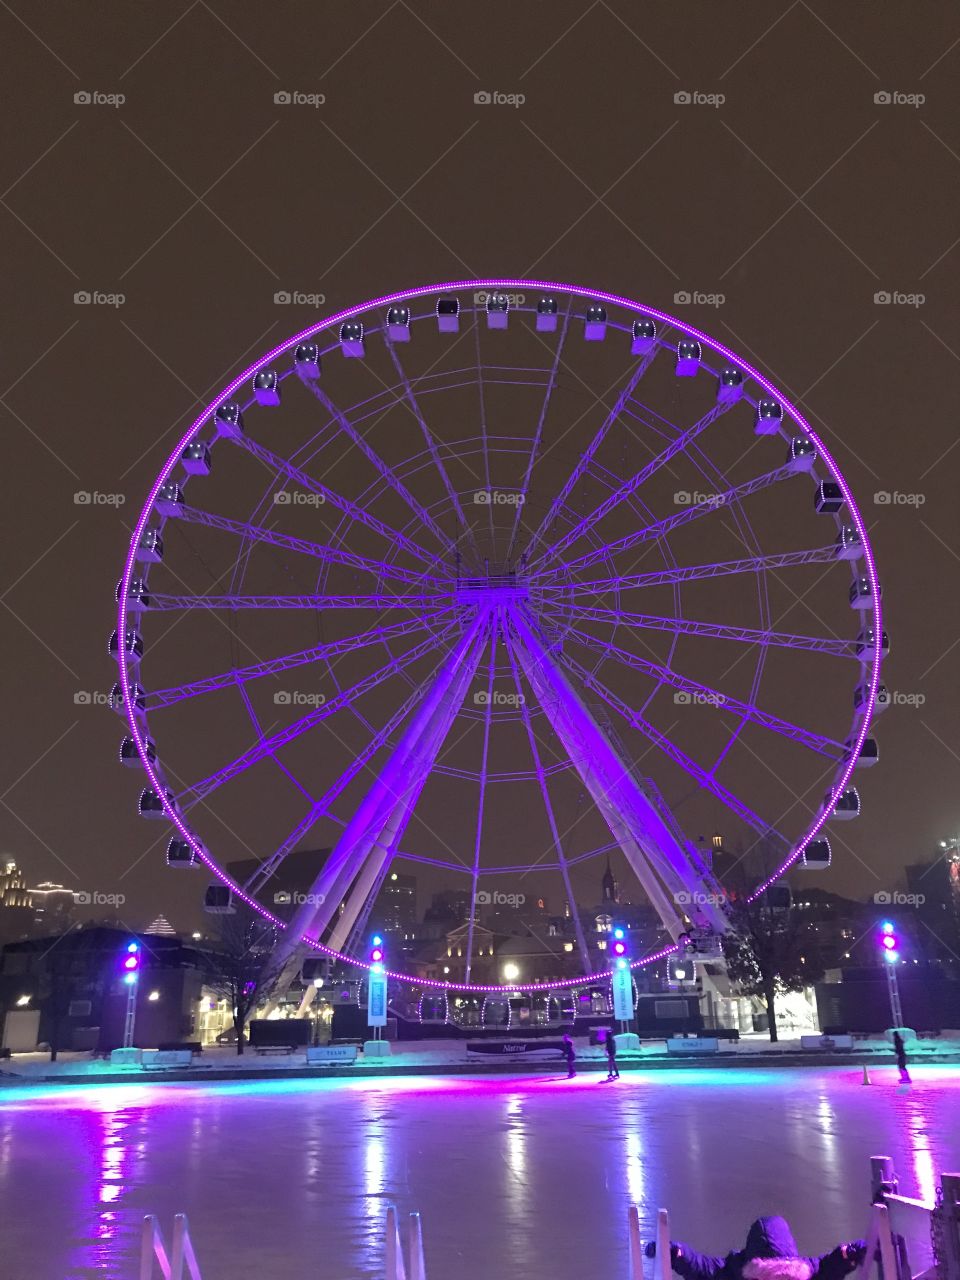 Montreal purple light big wheel in winter 